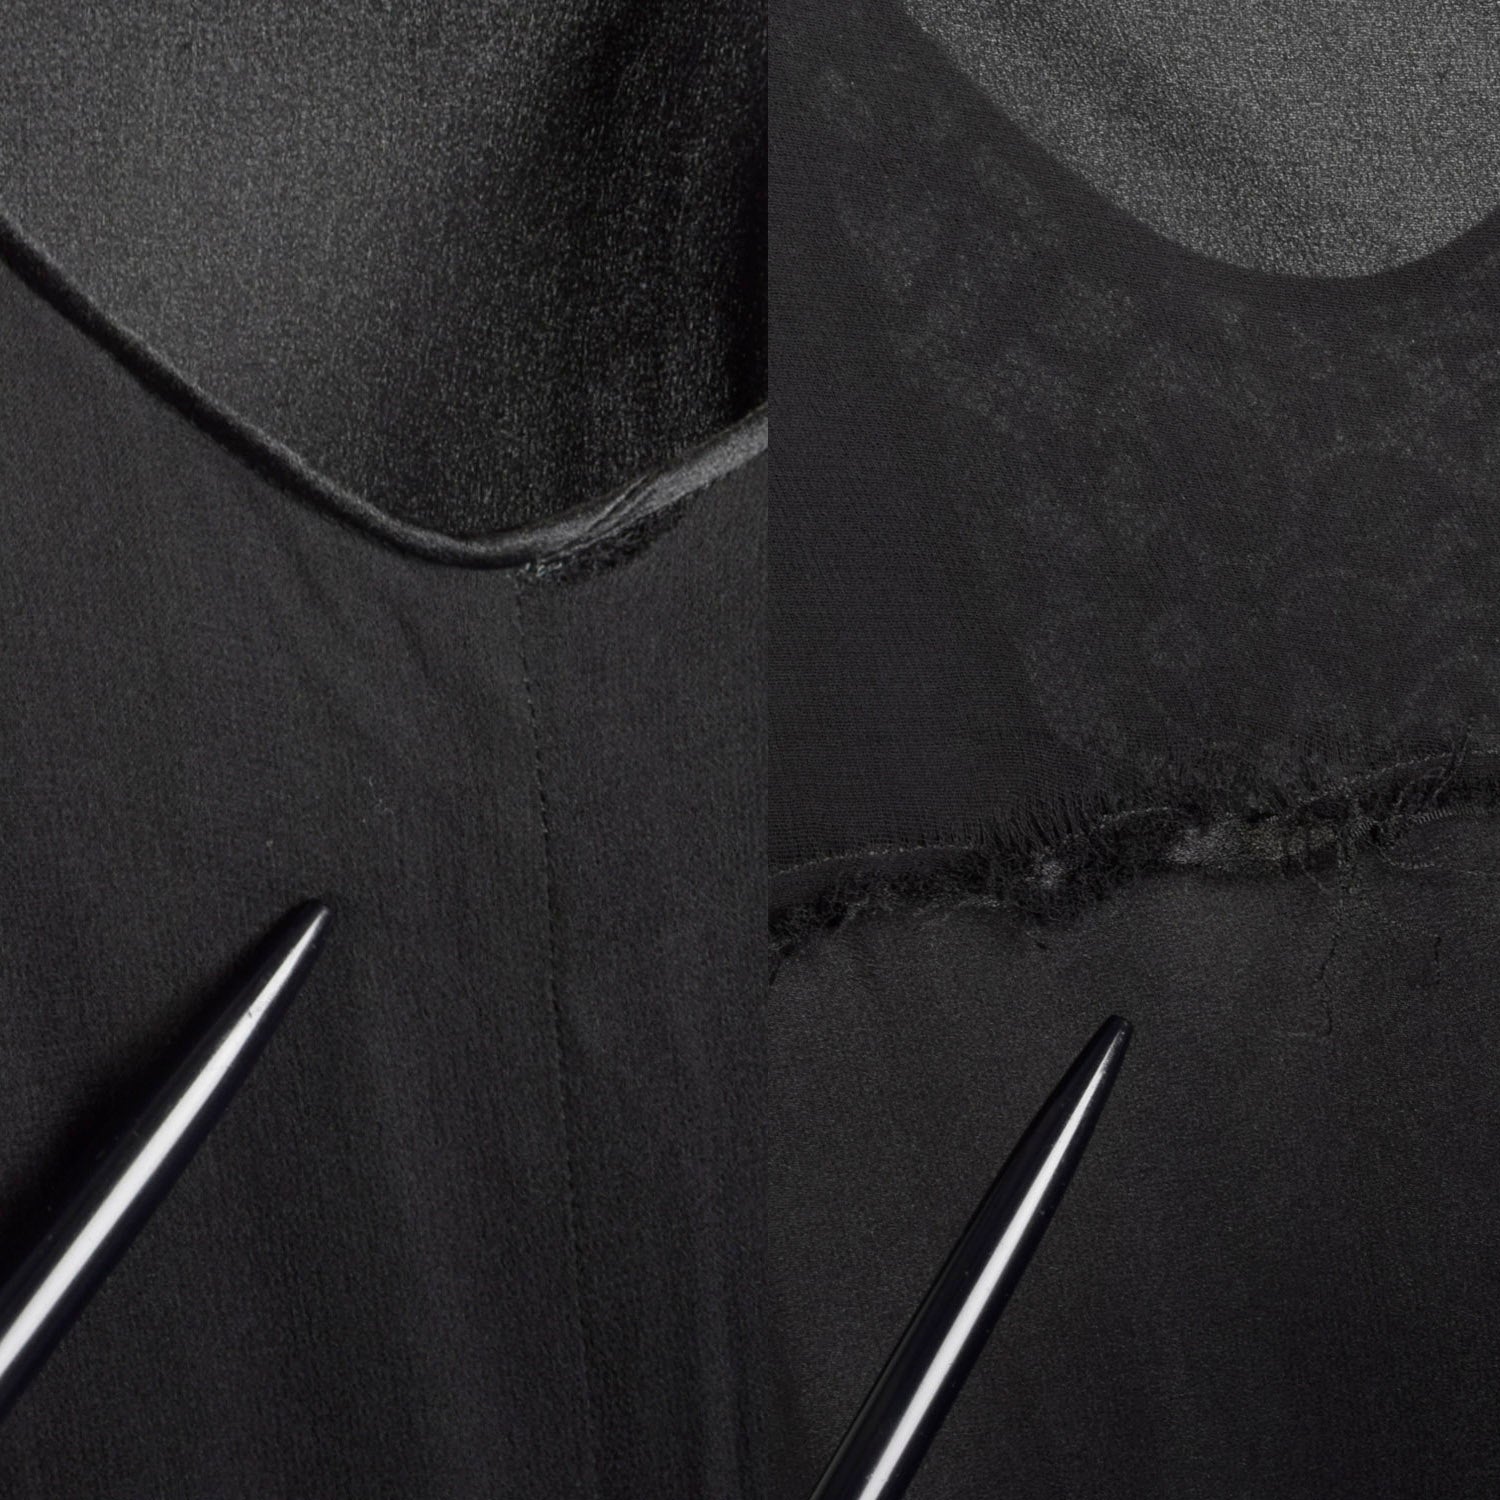 Medium 1920s Black Silk Dress Lace Panel Elegant Sleeveless Evening